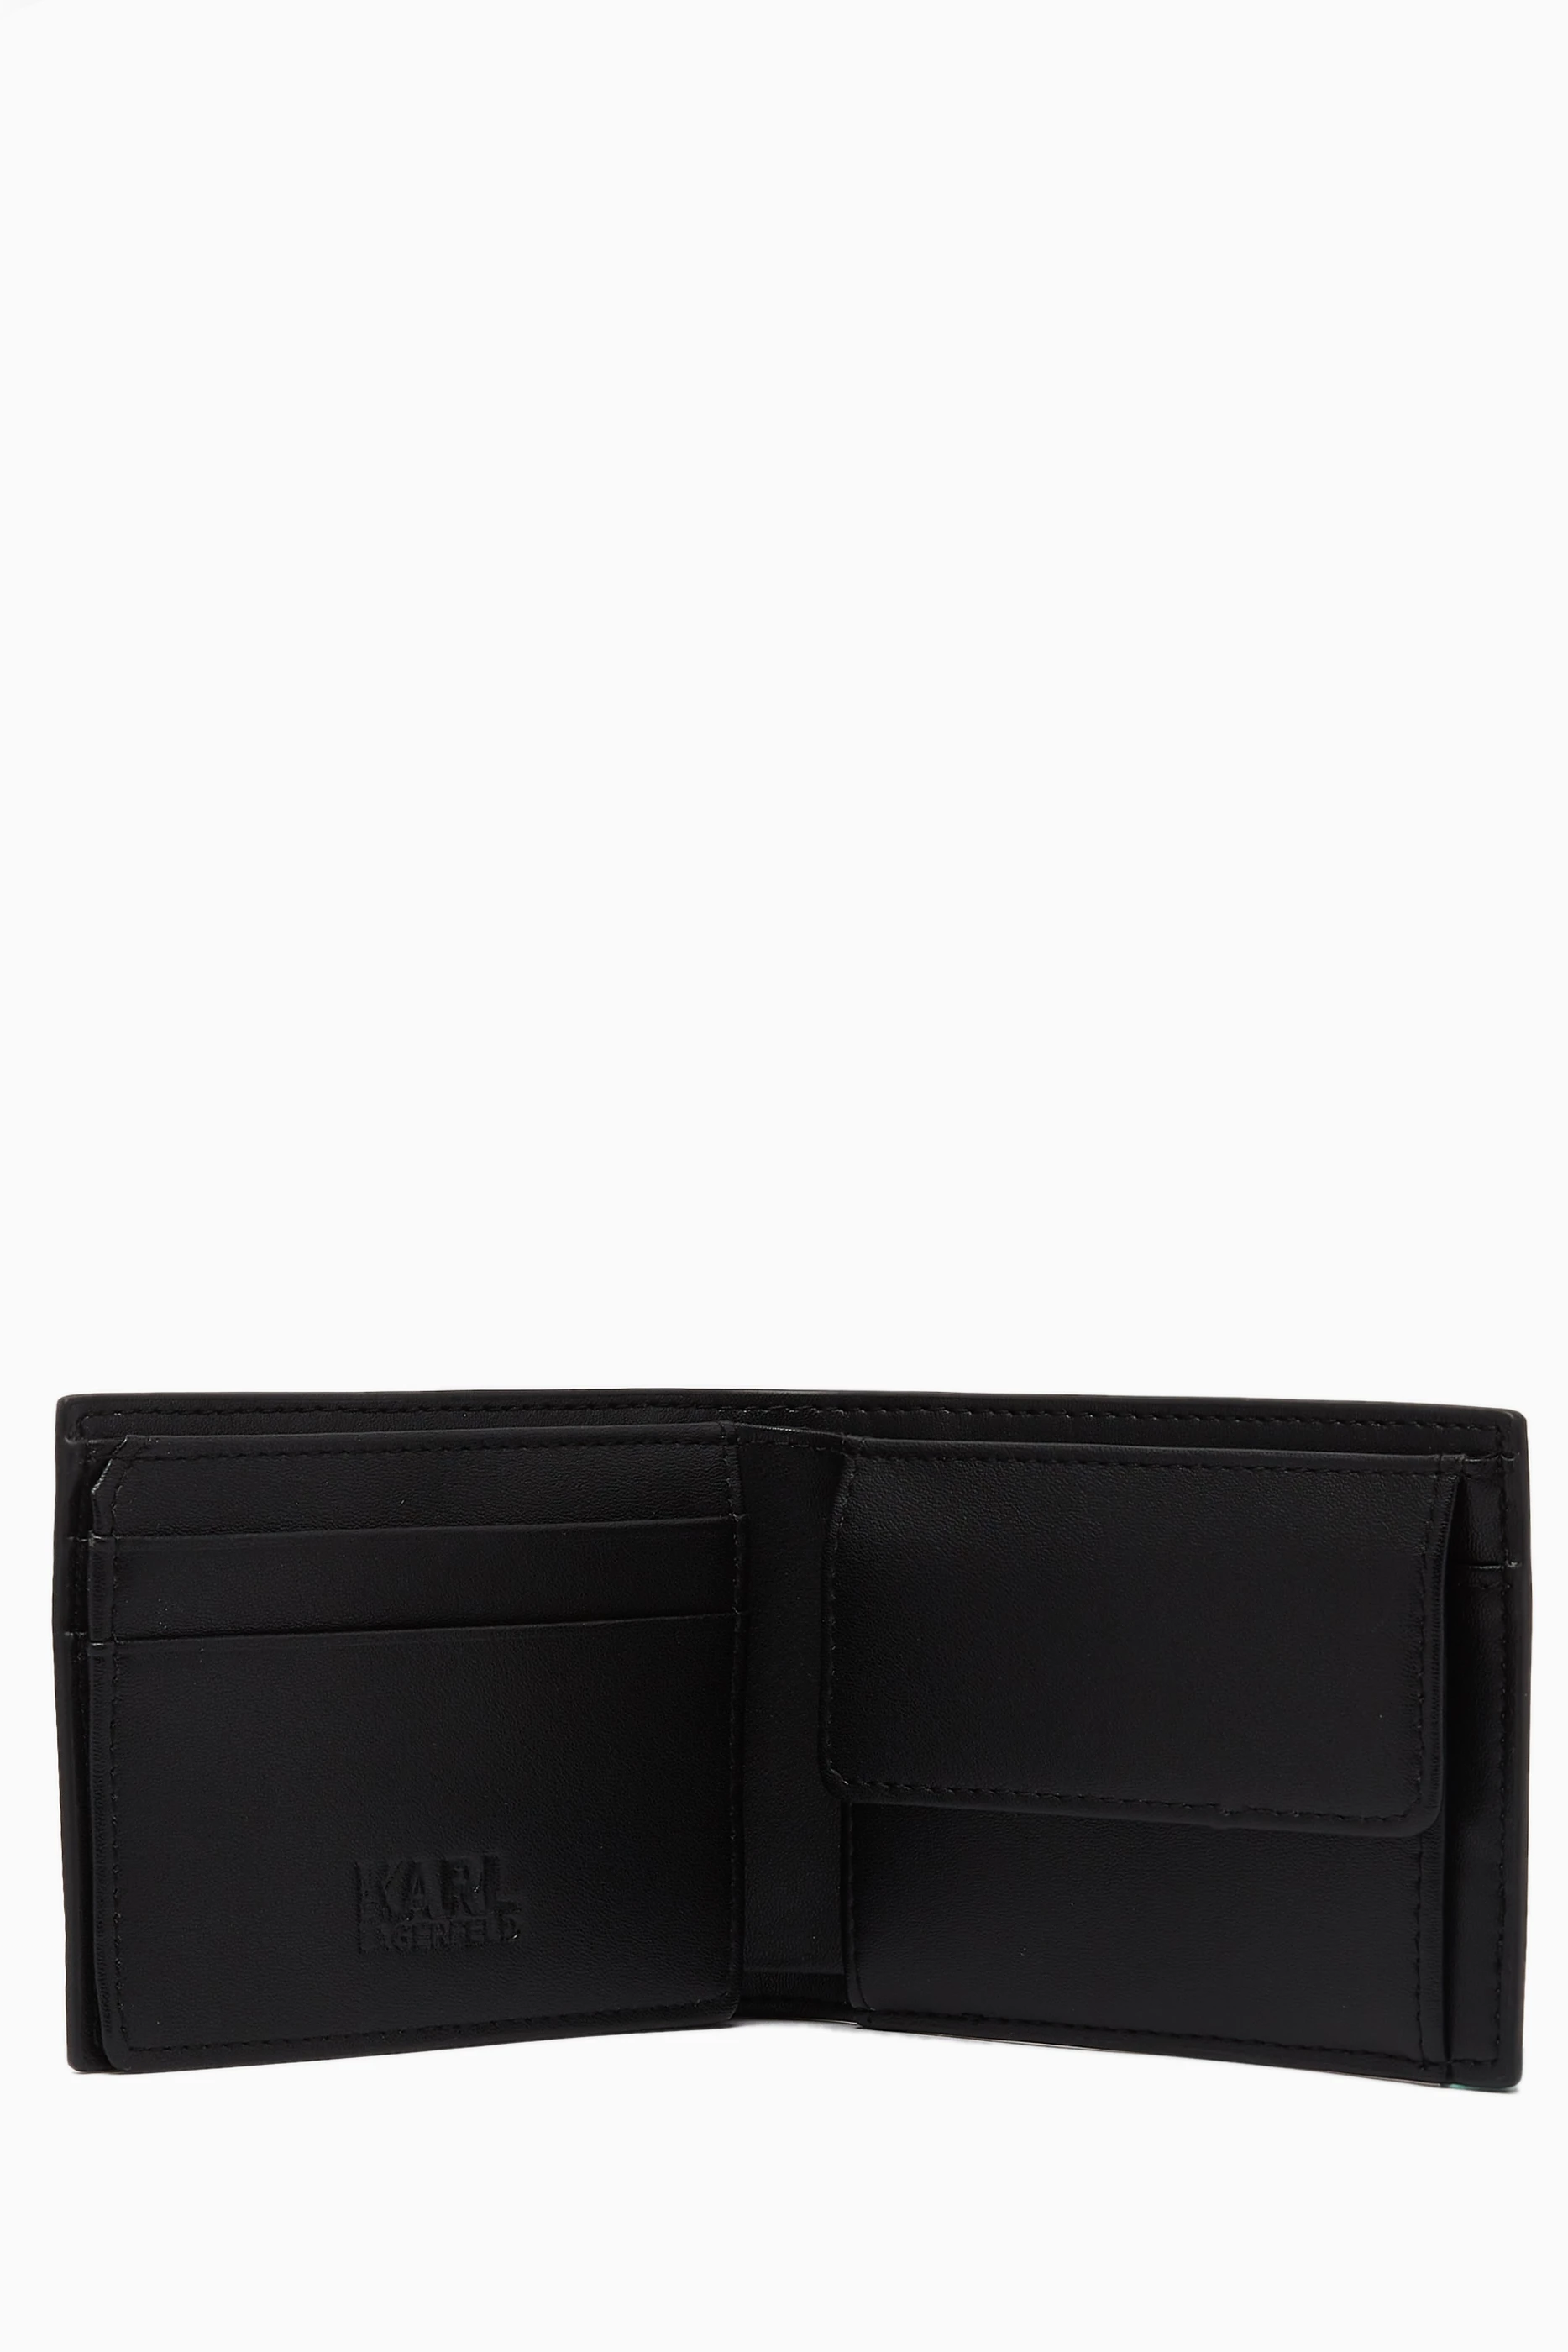 Karl Lagerfeld, K/Monogram Klassik Bi-Fold Wallet, Man, Black, Size: One Size